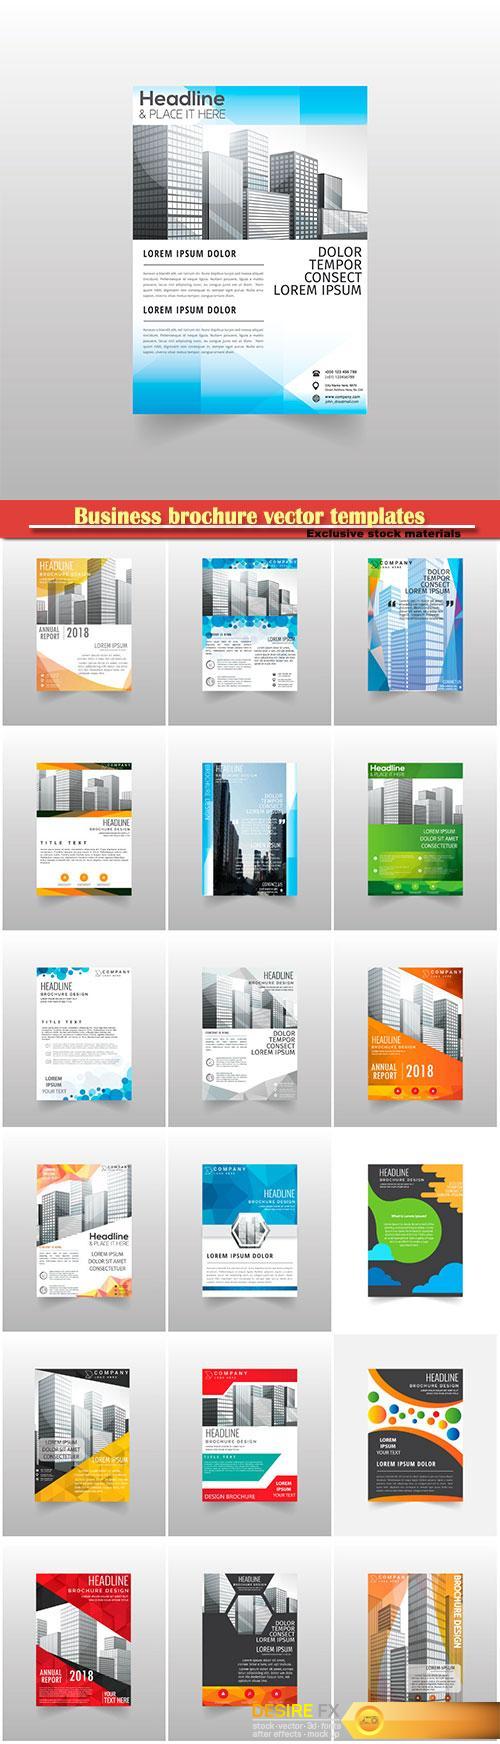 Business brochure vector templates, magazine cover, business mockup, education, presentation, report # 65